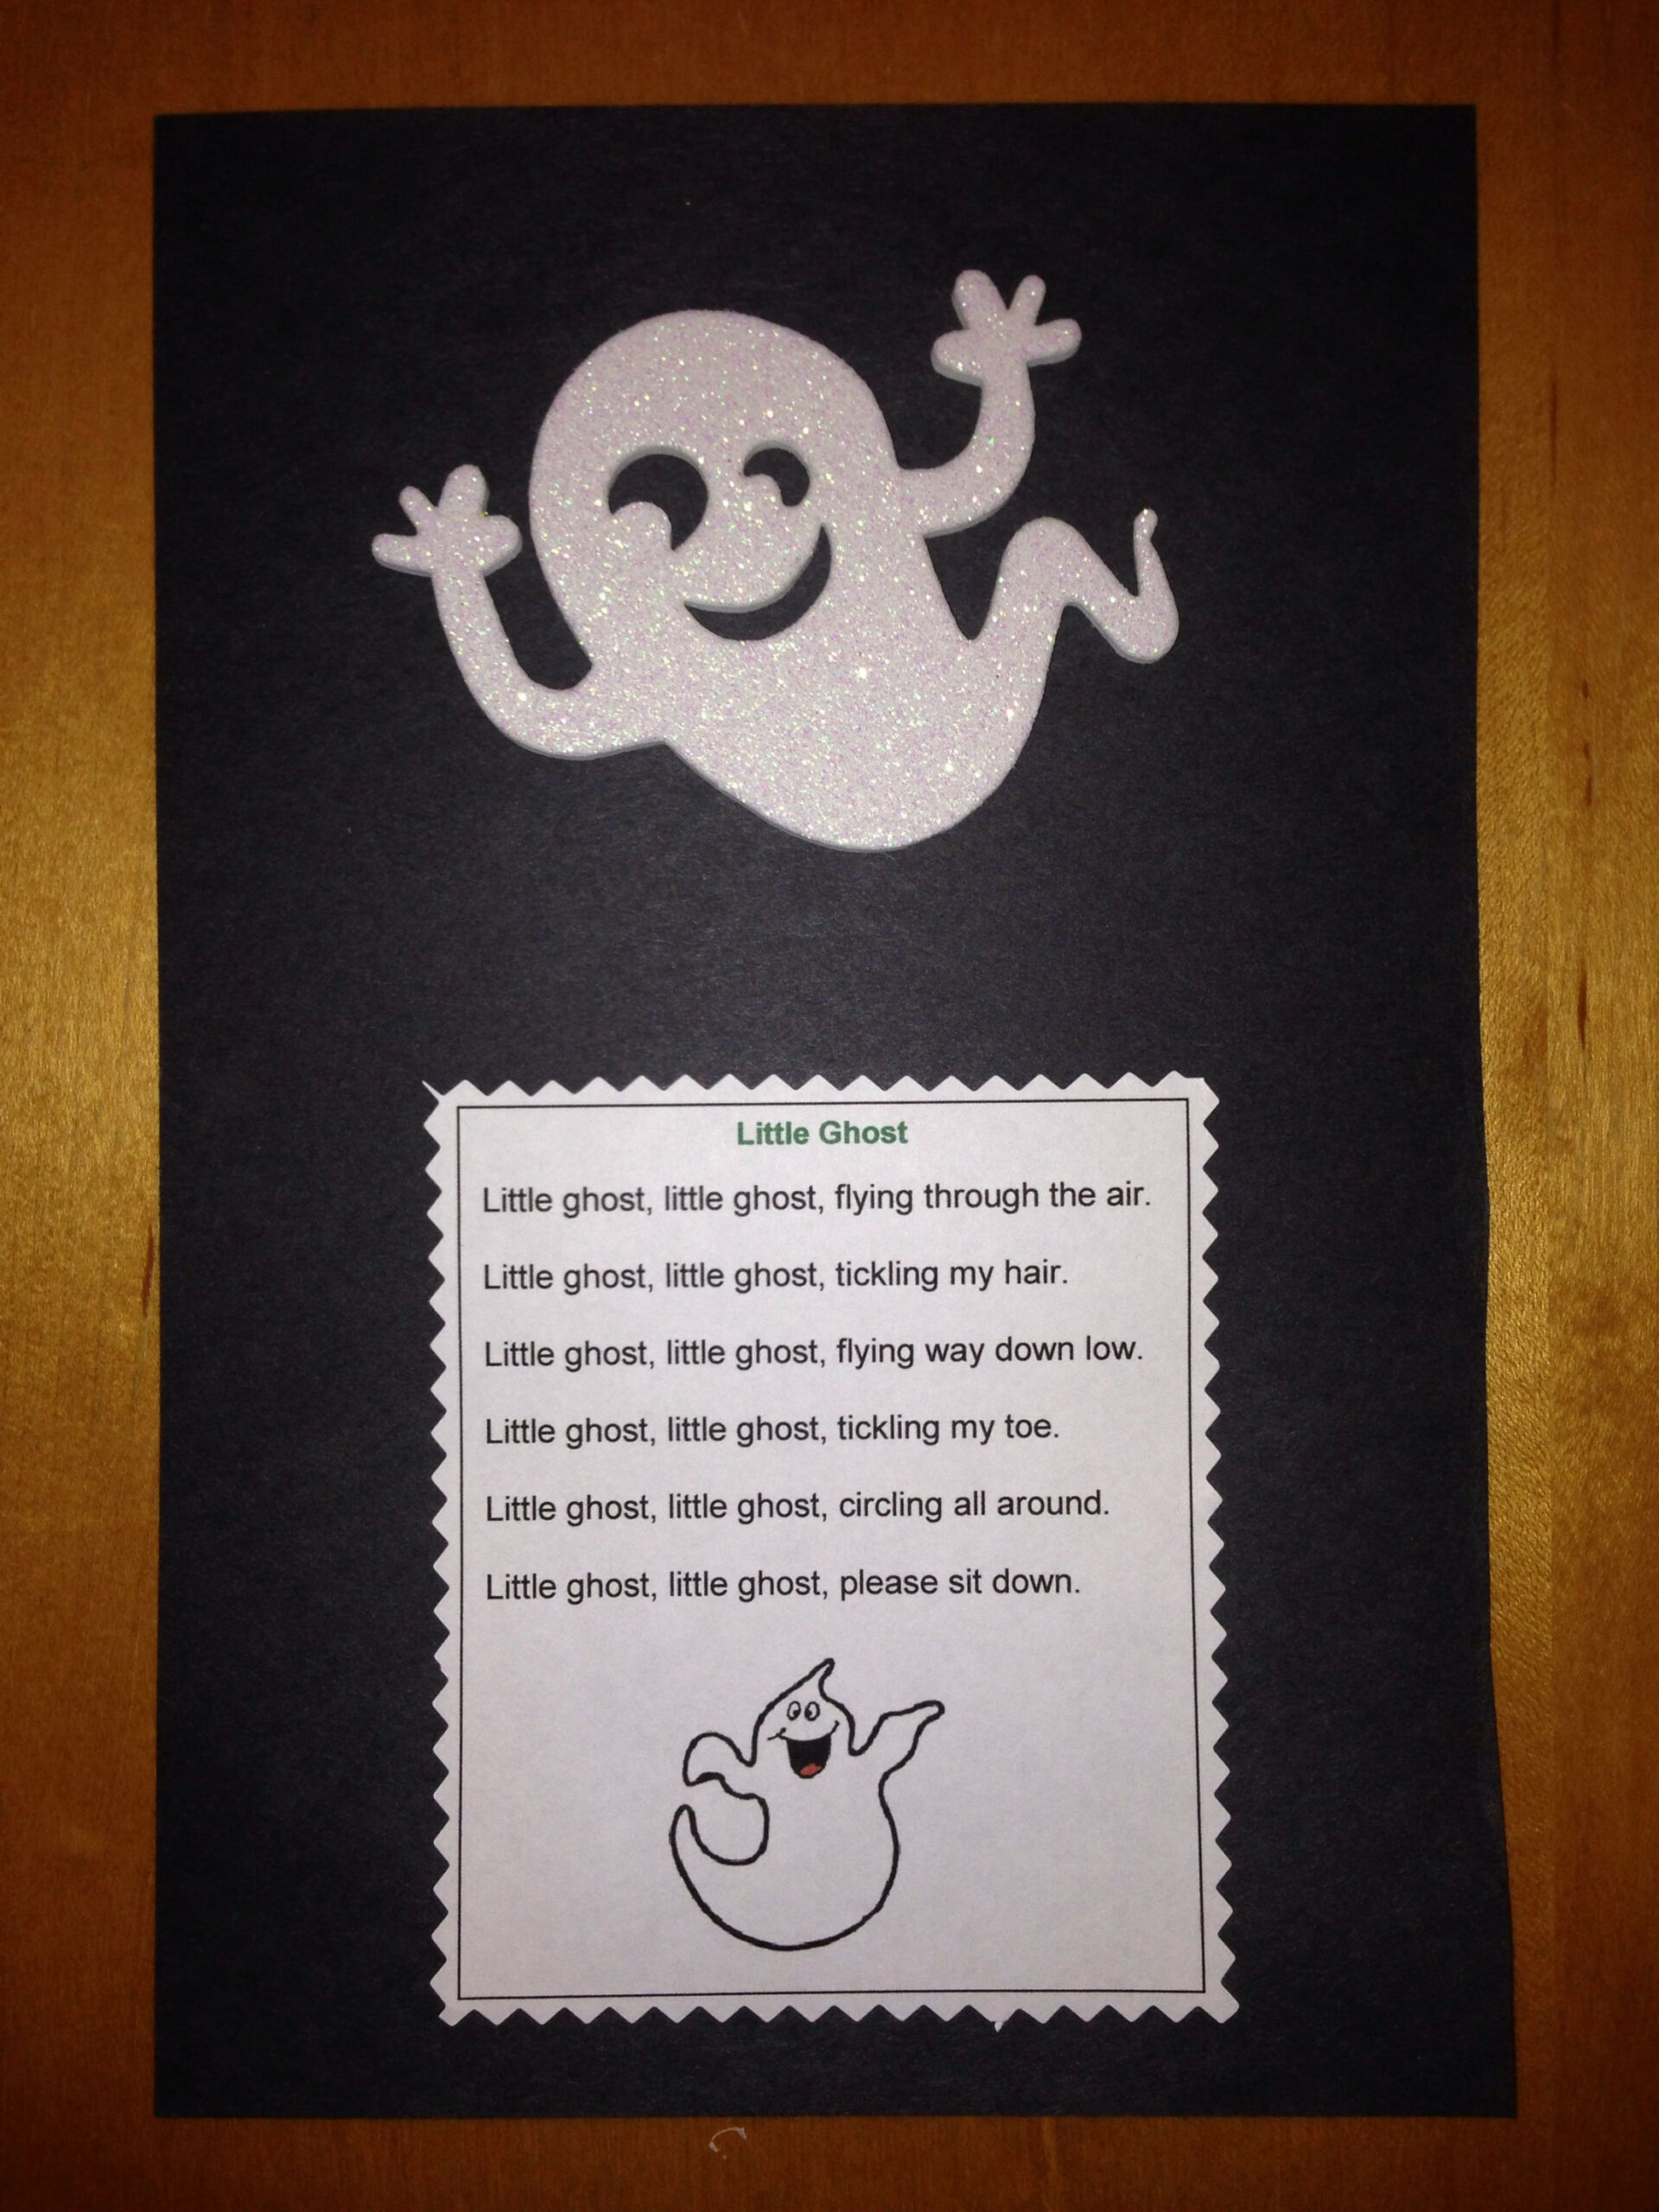 Preschool ghost craft and fun poem encouraging children to sit